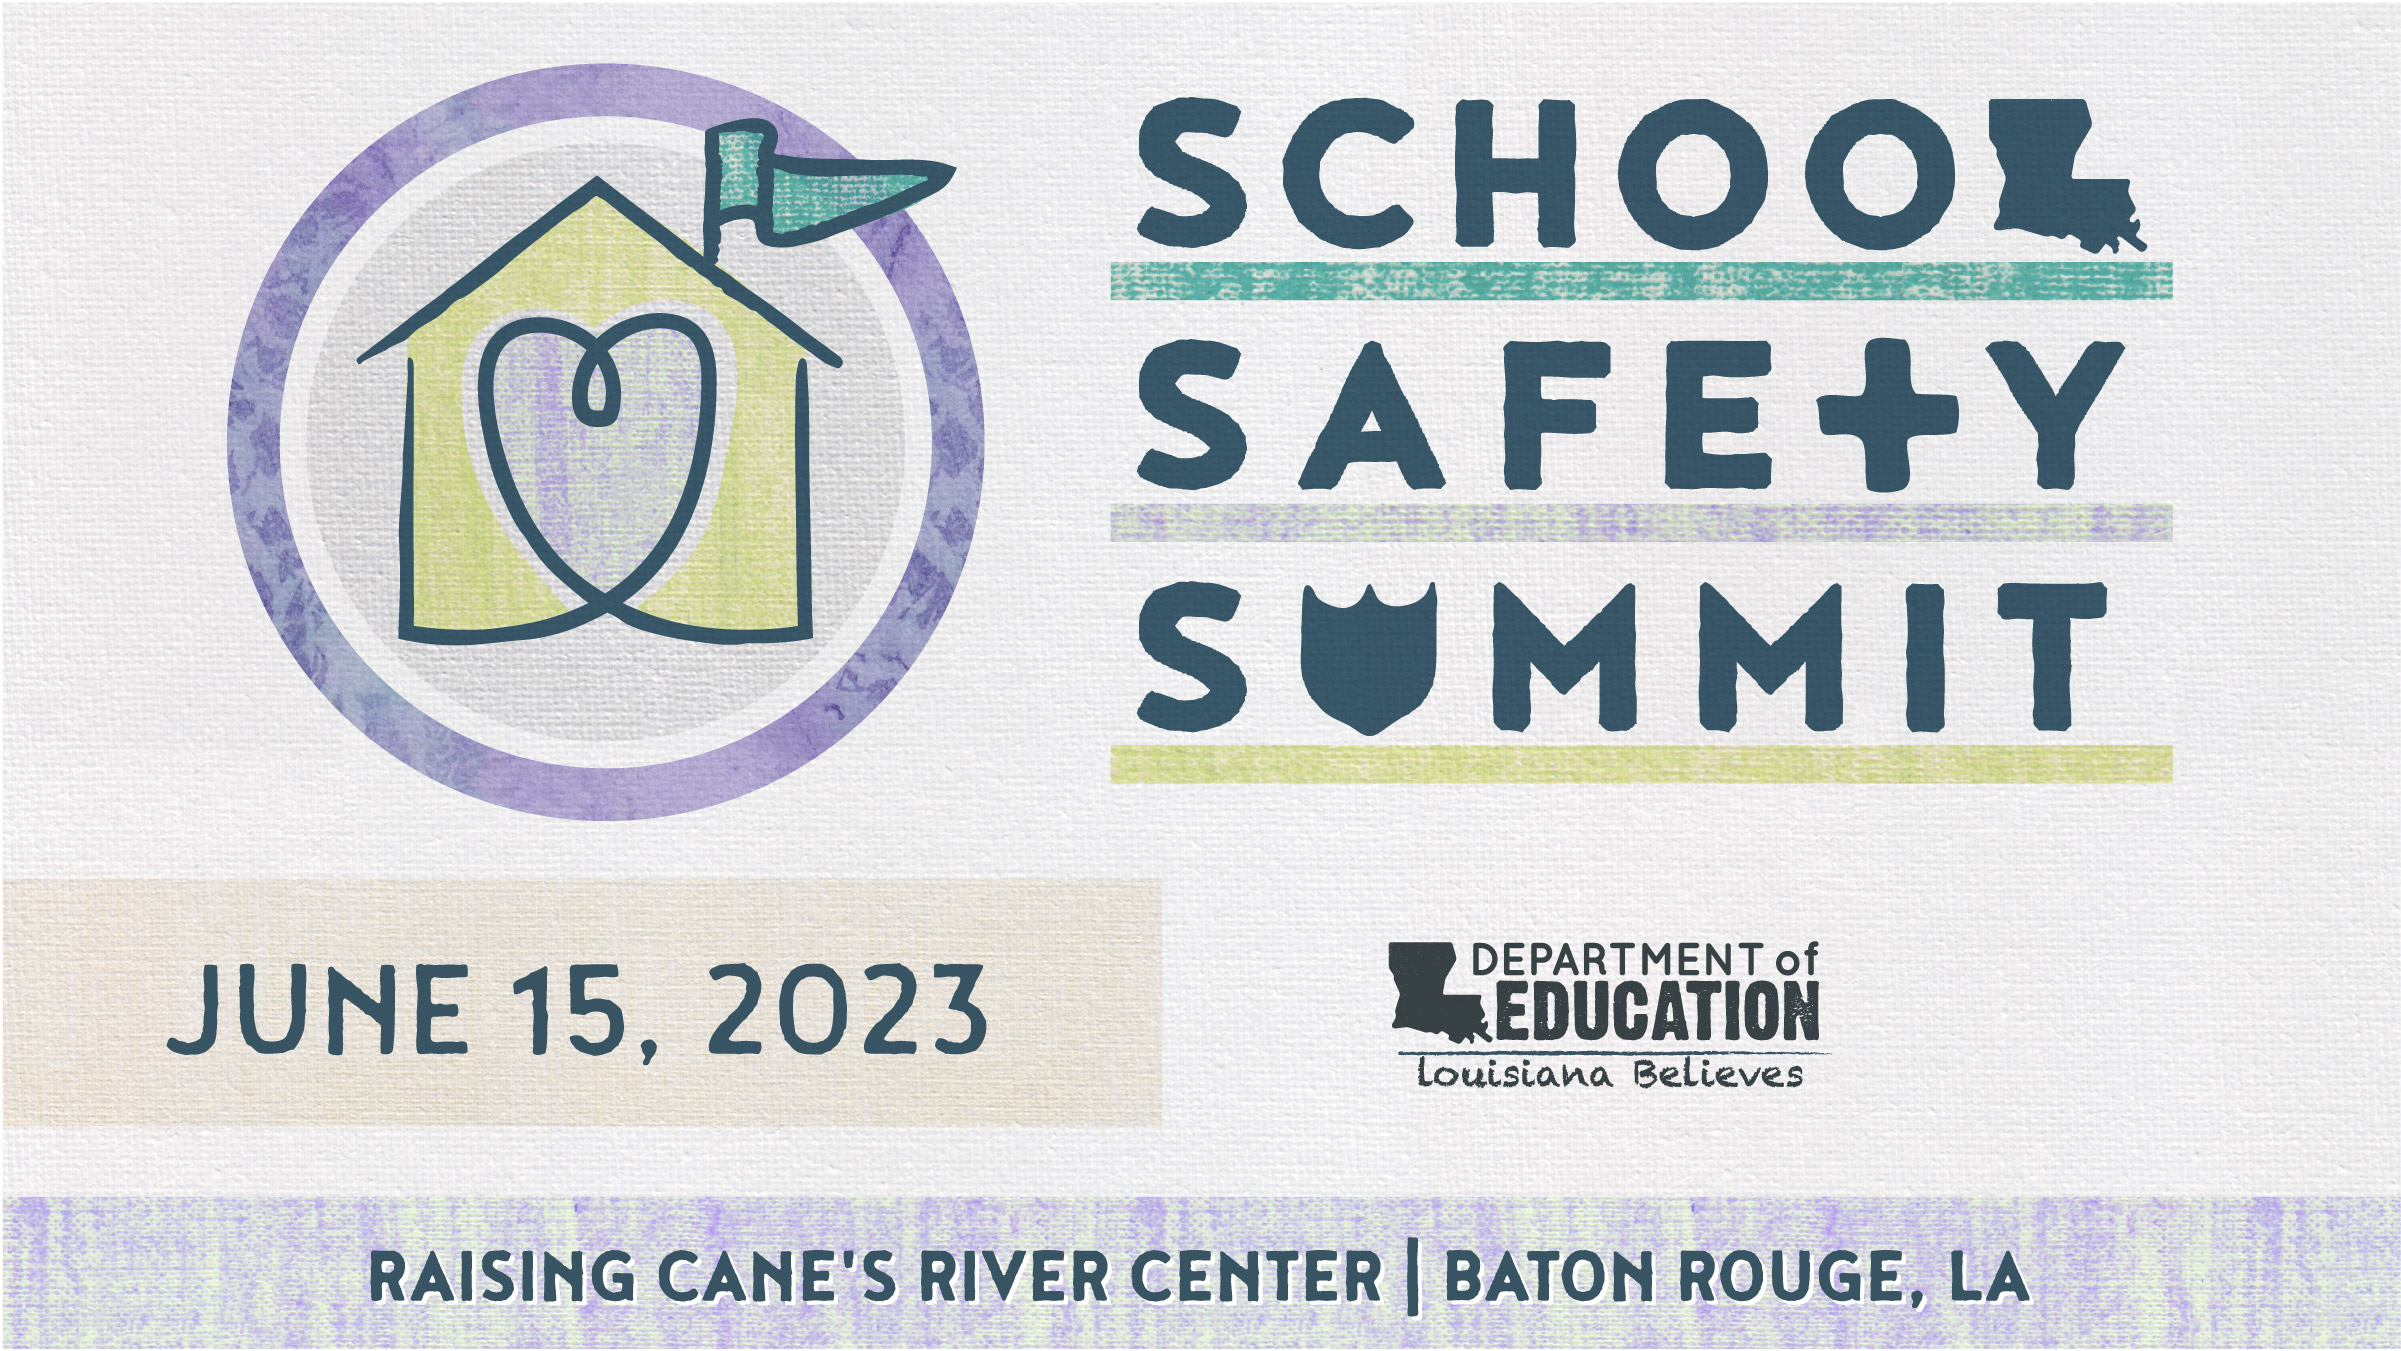 School Safety Summit - June 15, 2023 - Raising Cane's River Center, Baton Rouge, La